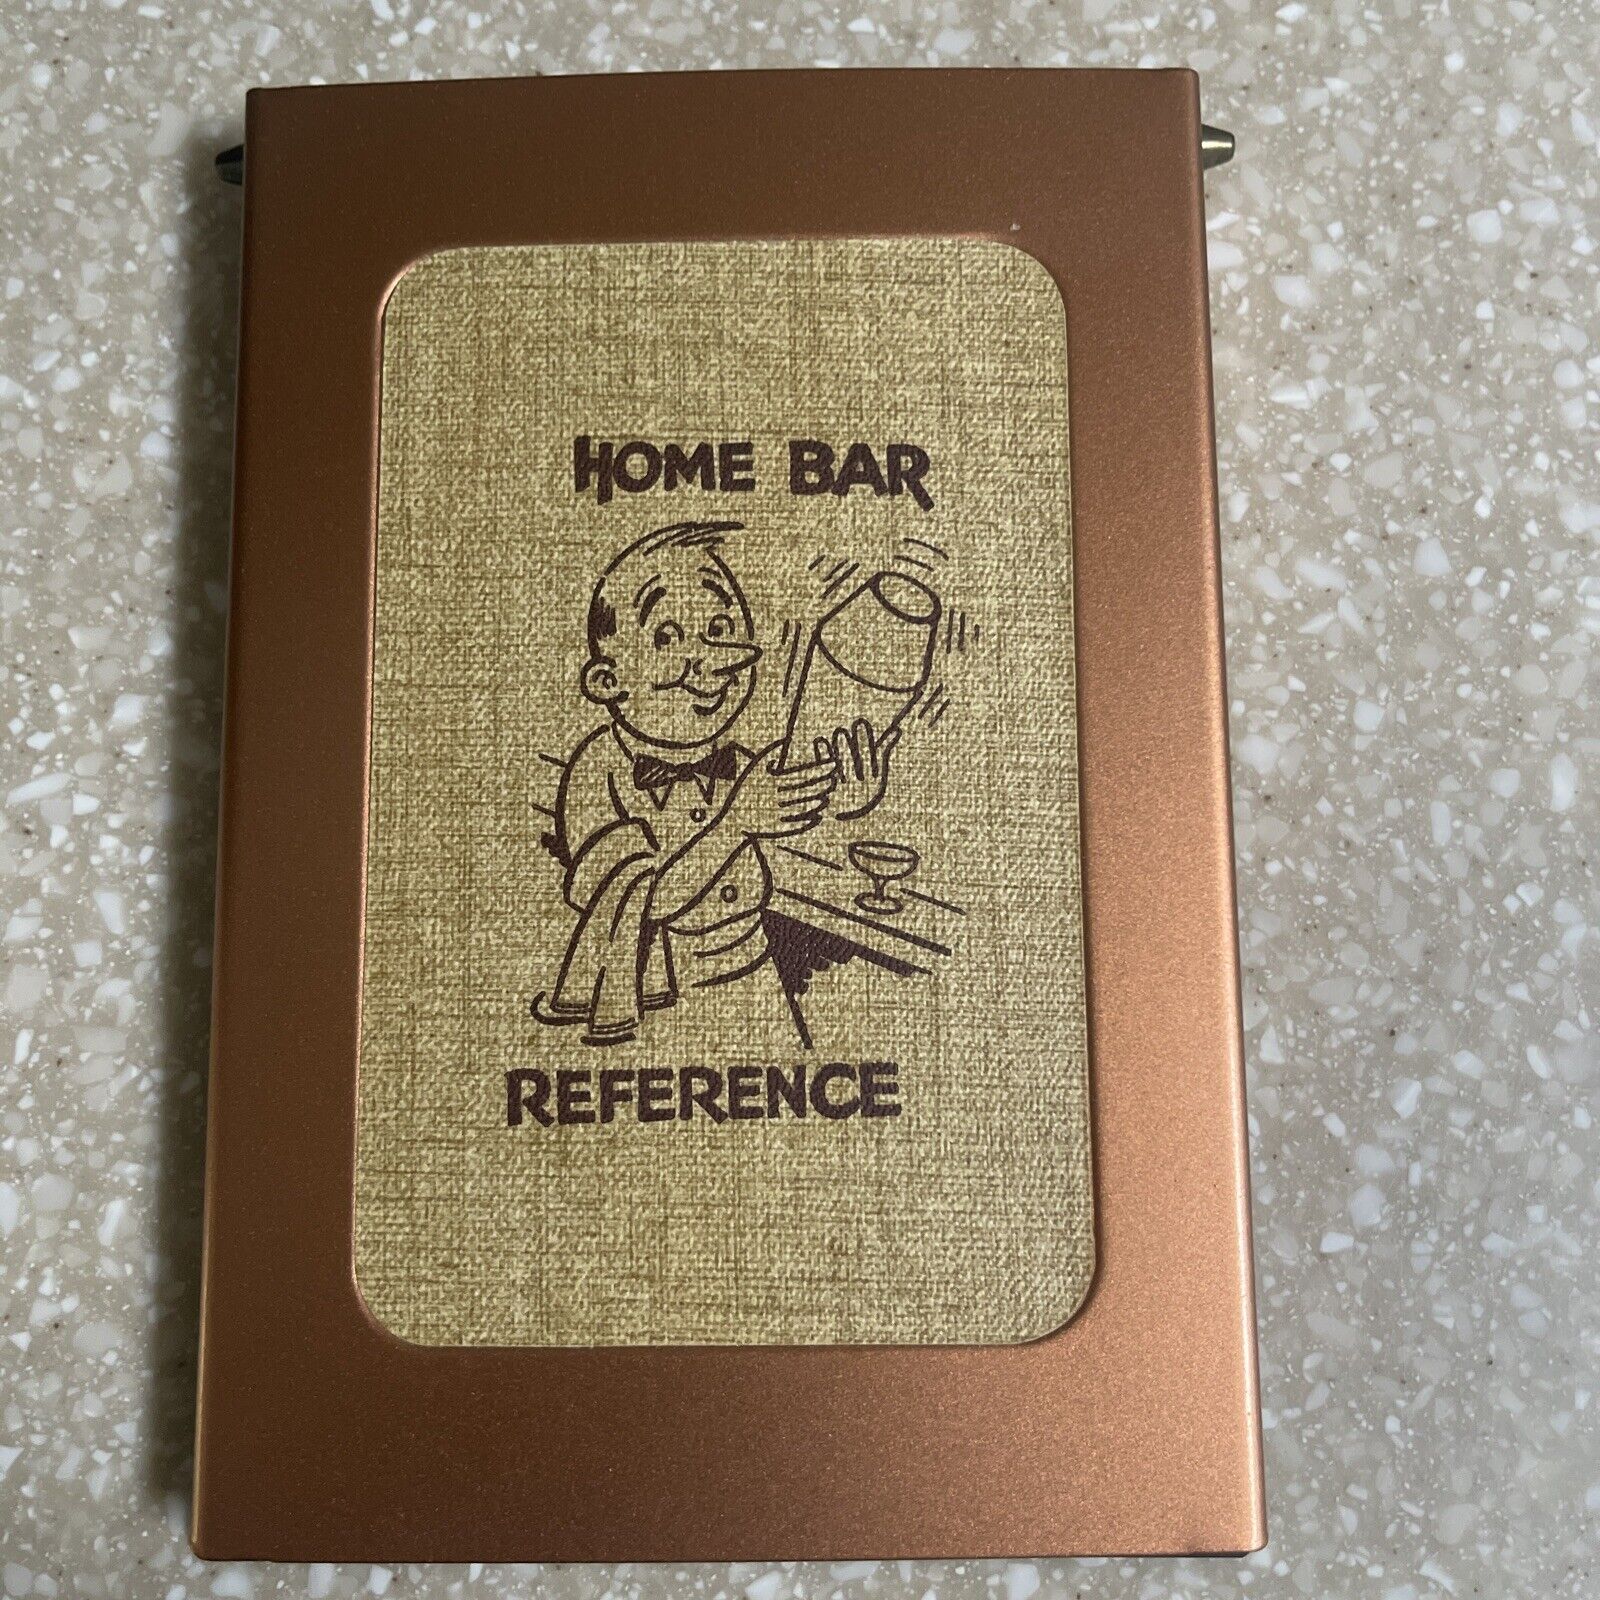 Vintage Royal Memo Pad Home Bar Reference Drink Recipes in Original Box 1950s